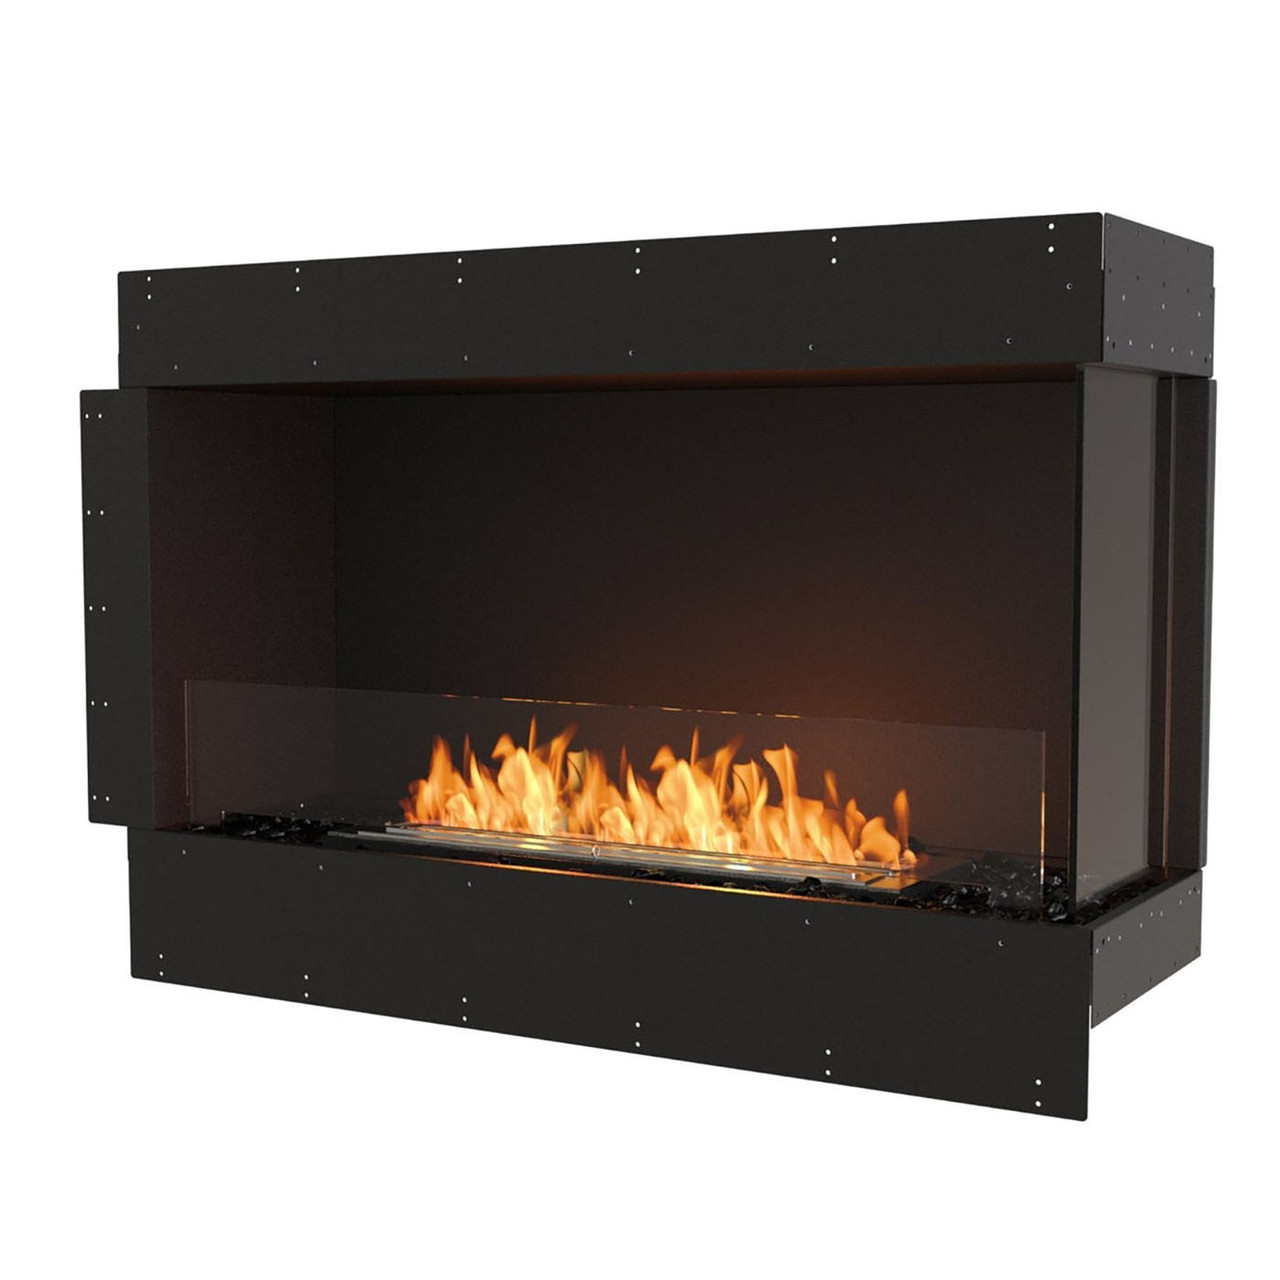  Smart Fireplace Insert 48 Inch 120 cm Black Remote WiFi Control  Google Home 12.5 L Bio Ethanol Burner : Home & Kitchen